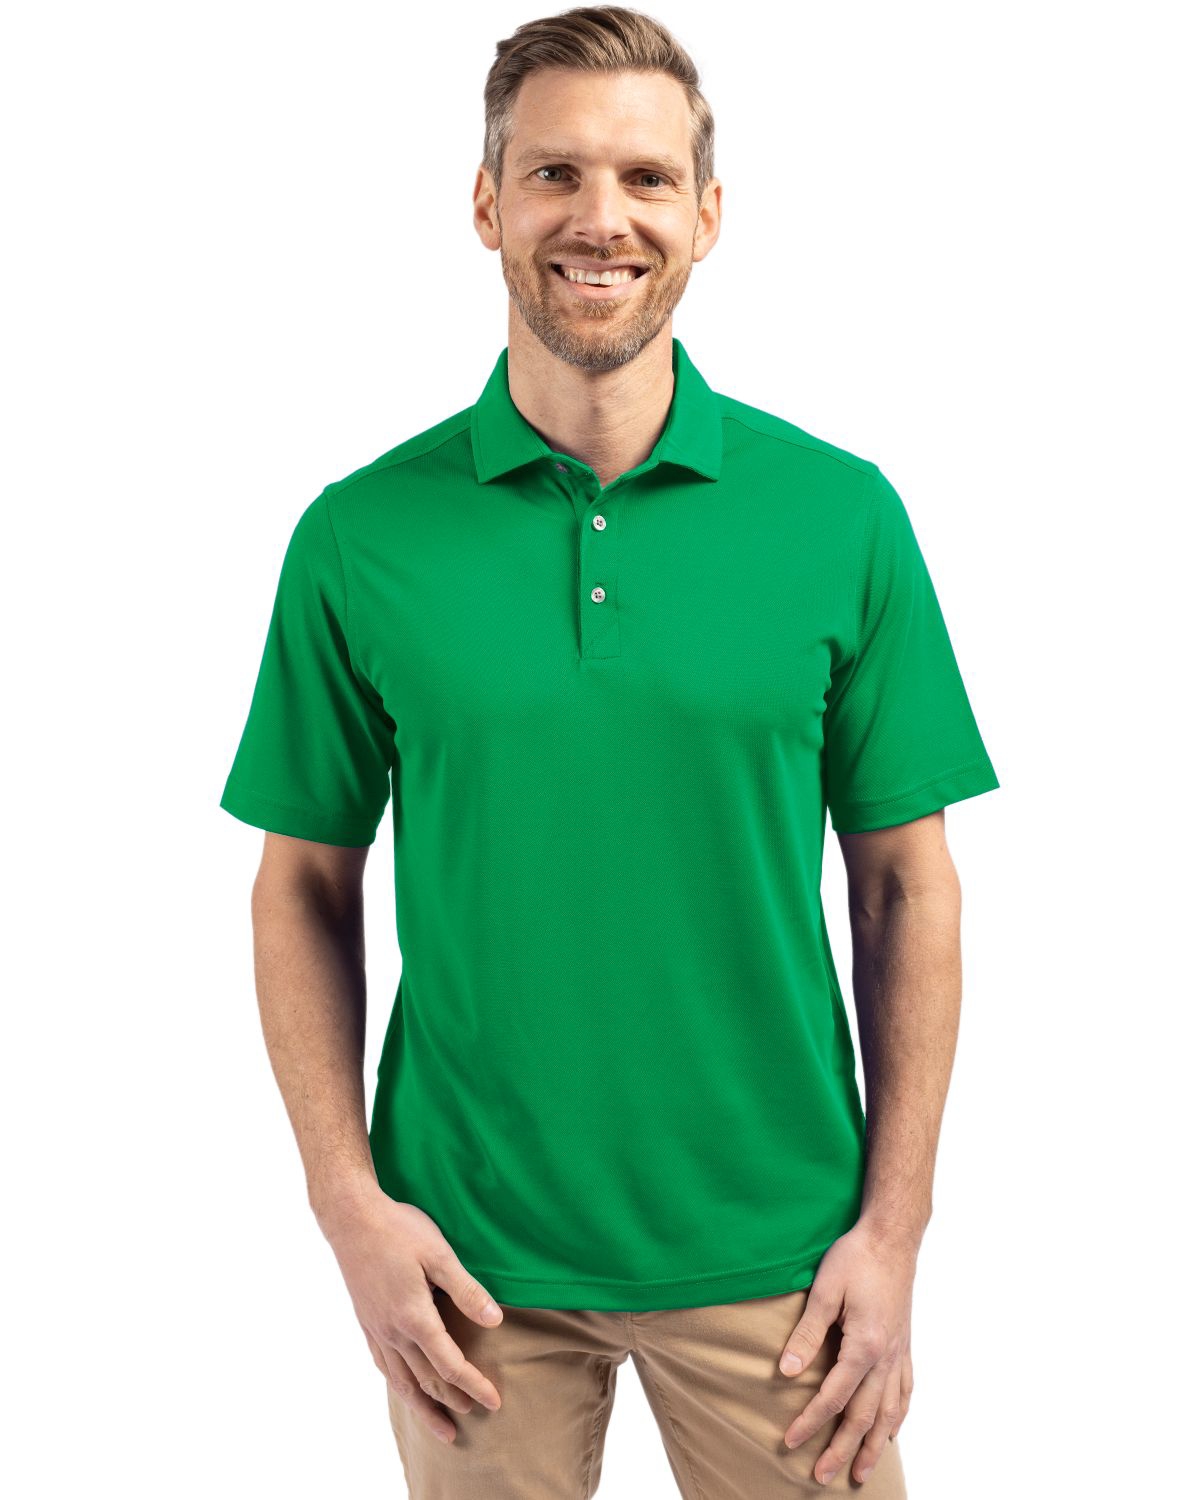 Men's Virtue Eco Pique Recycled Polo Shirt - Kelly green